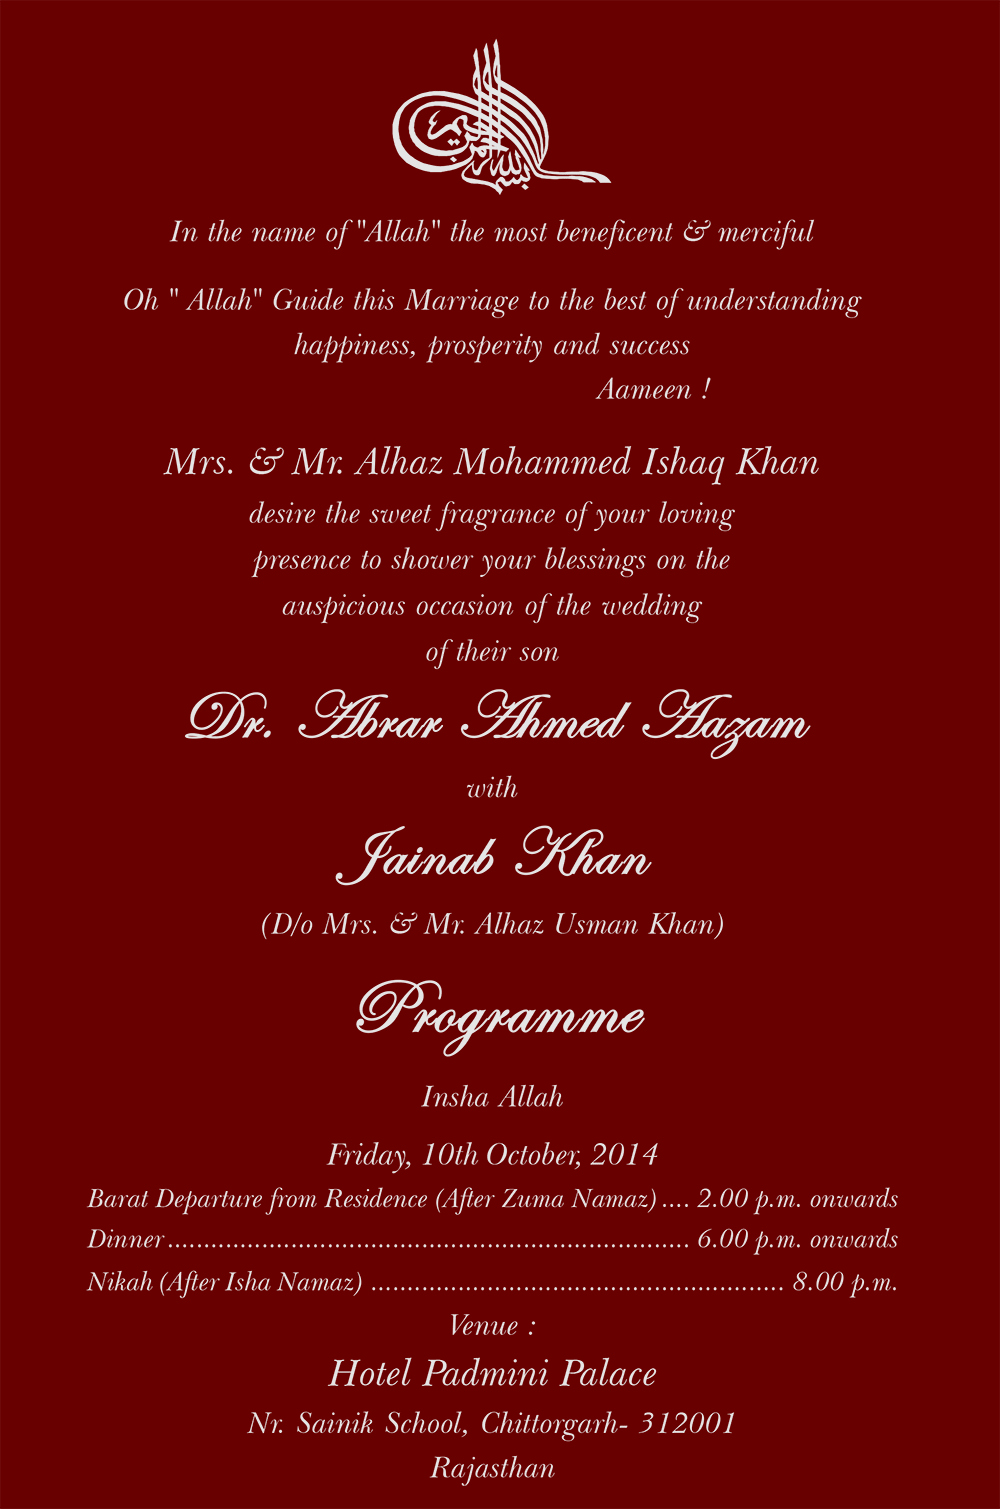 Muslim Wedding Invitation Wording Lovely Muslim Wedding Invitation Wording 010